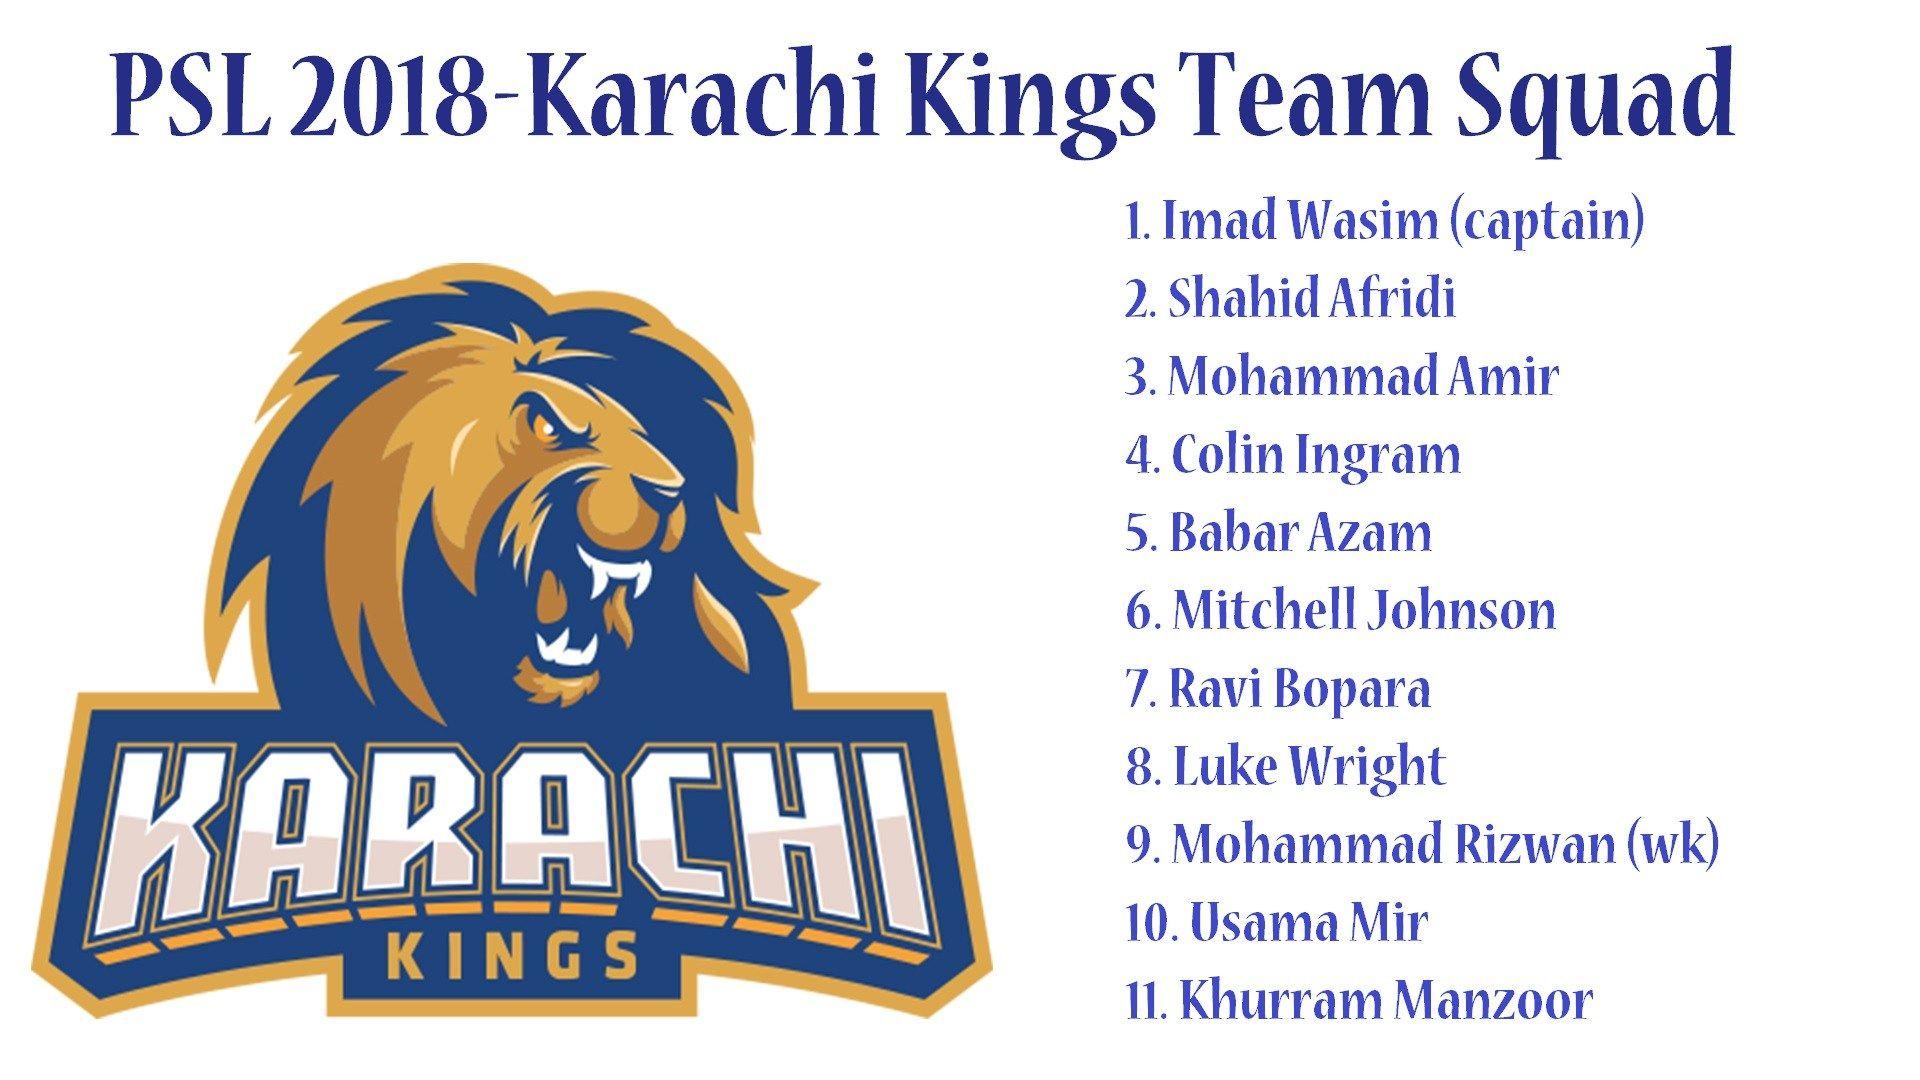 King Squad Logo - Karachi Kings Team Squad 2018. Karachi Kings HD Logo Wallpaper